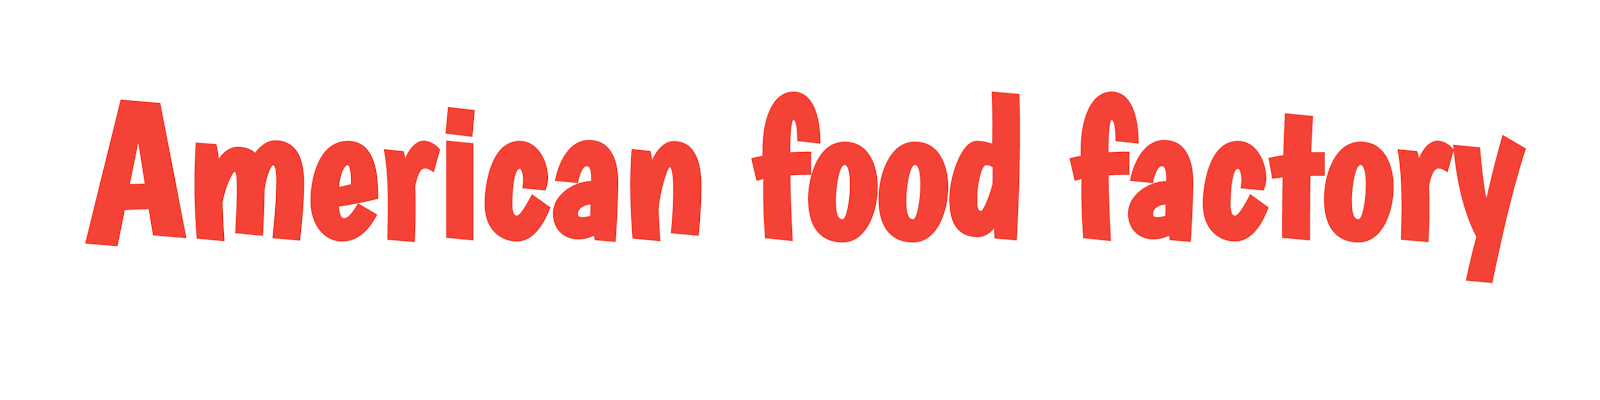 American food factory